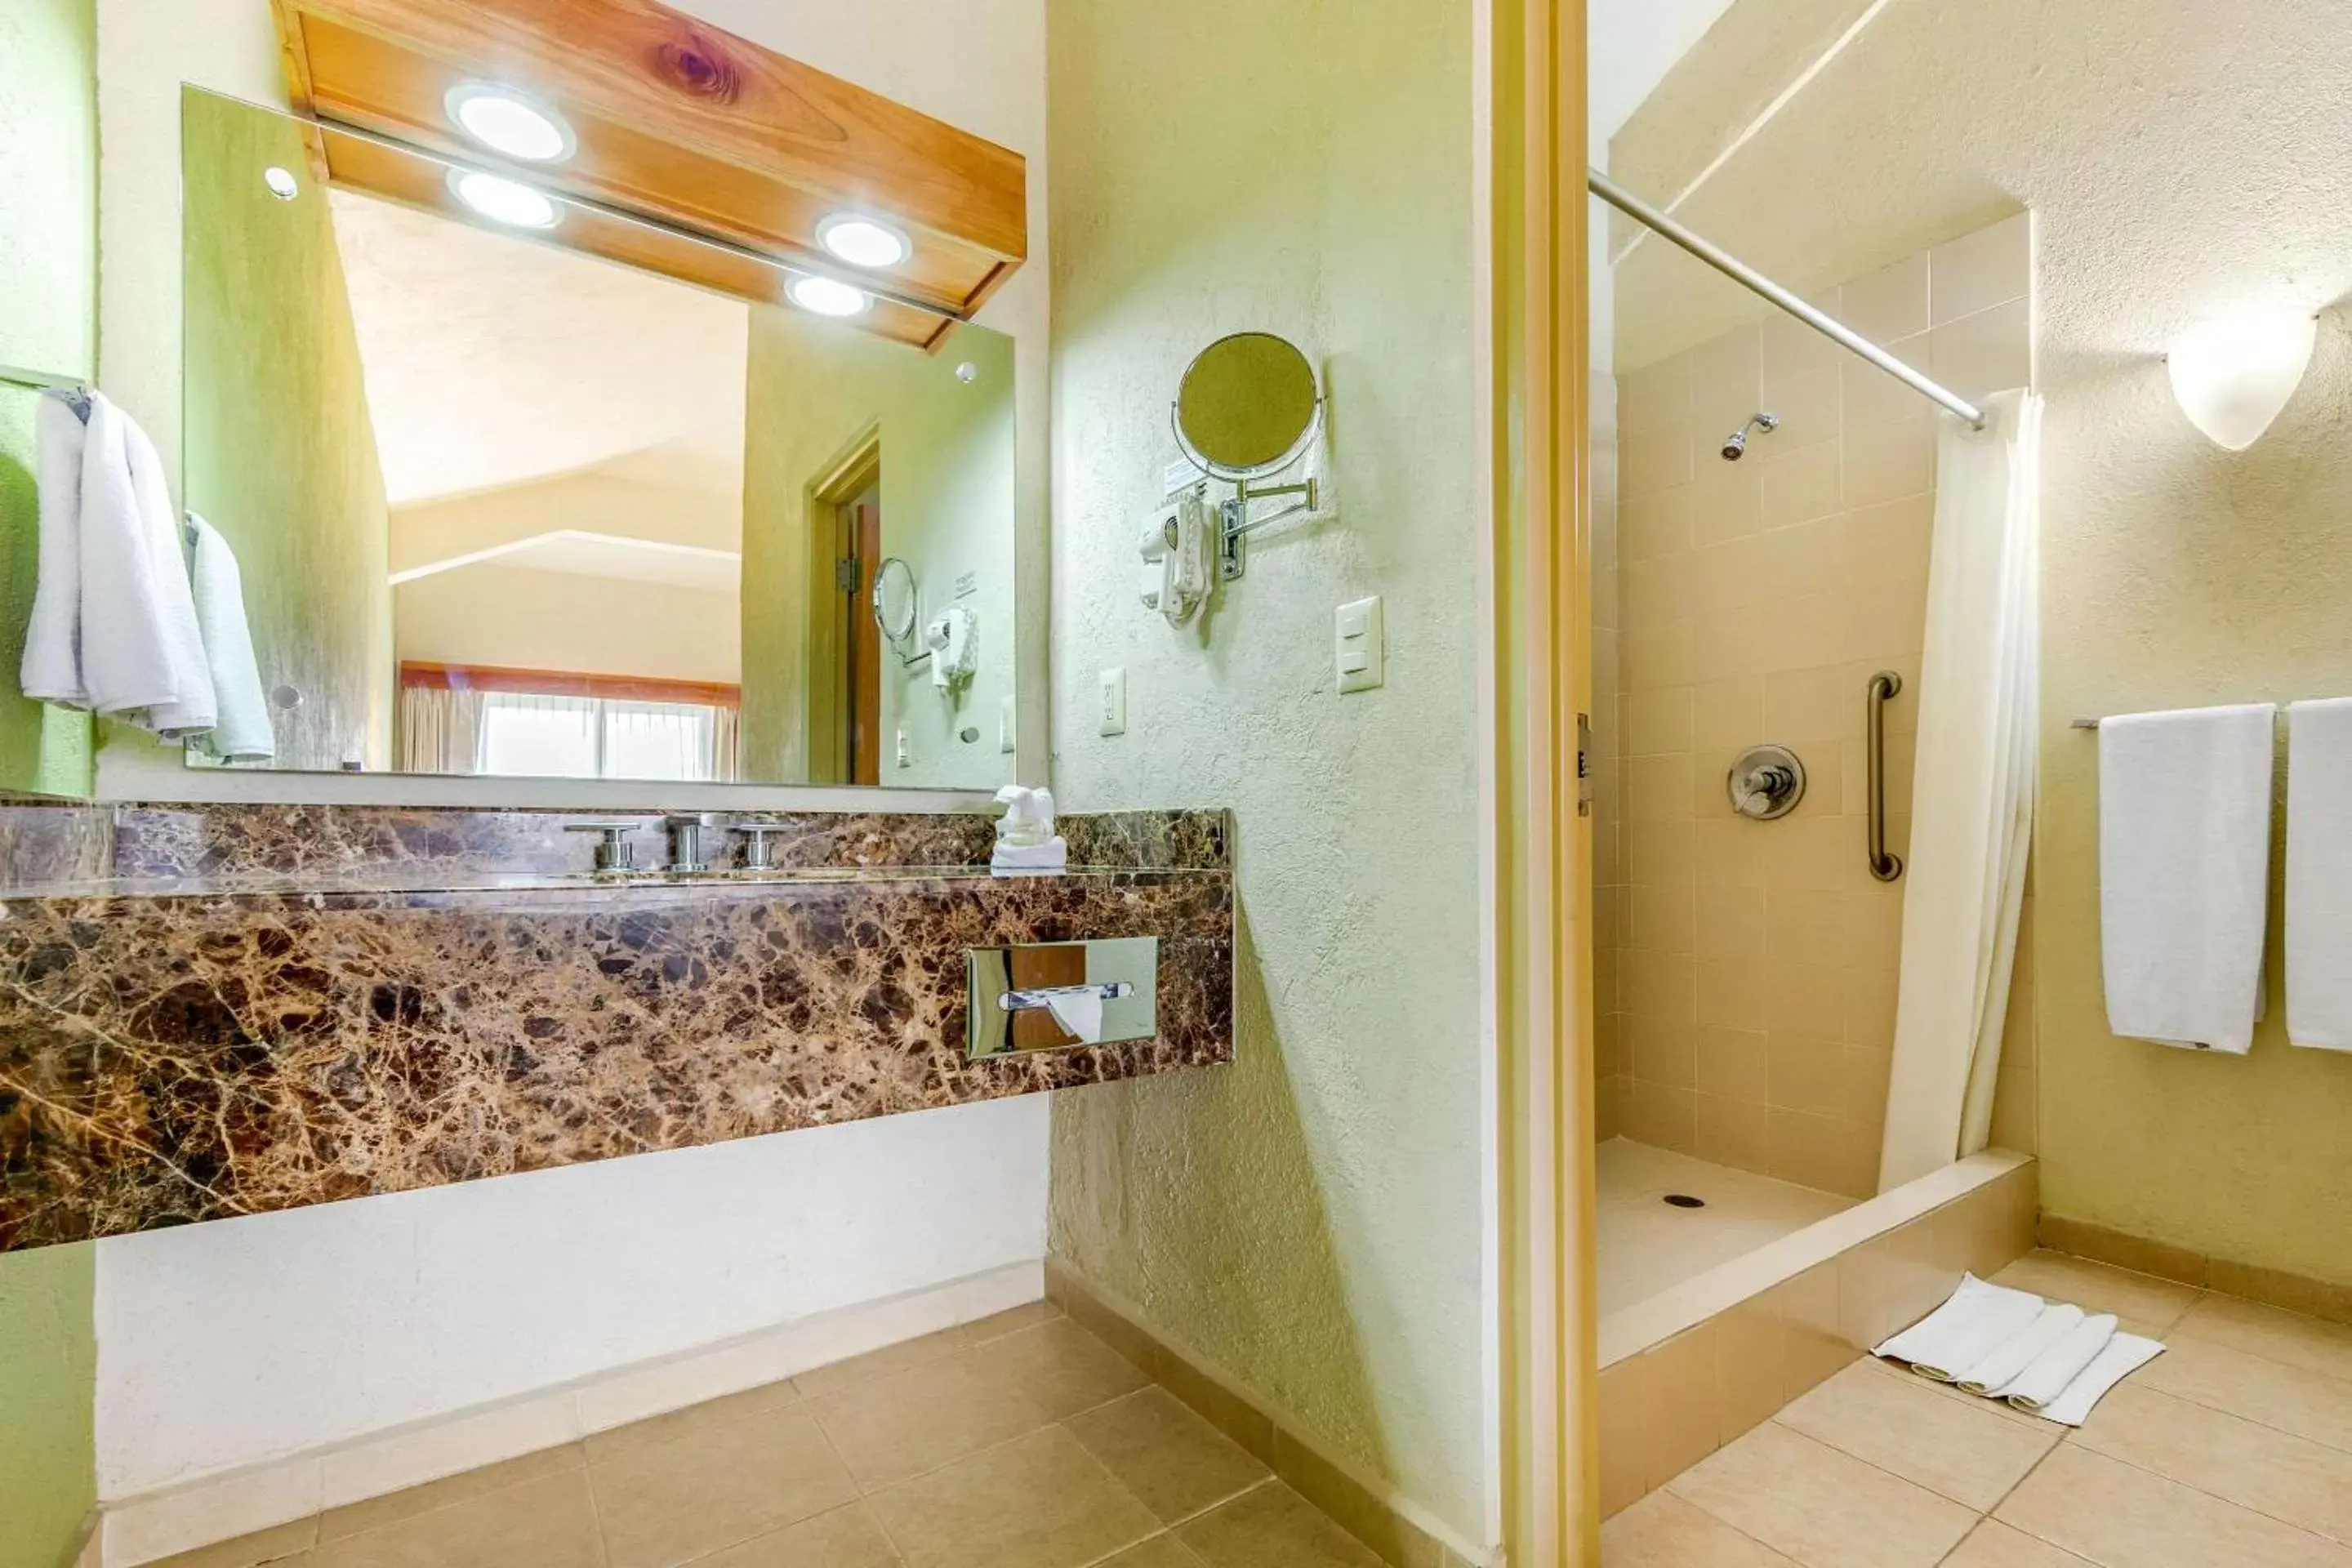 Photo of the whole room, Bathroom in Comfort Inn Puerto Vallarta